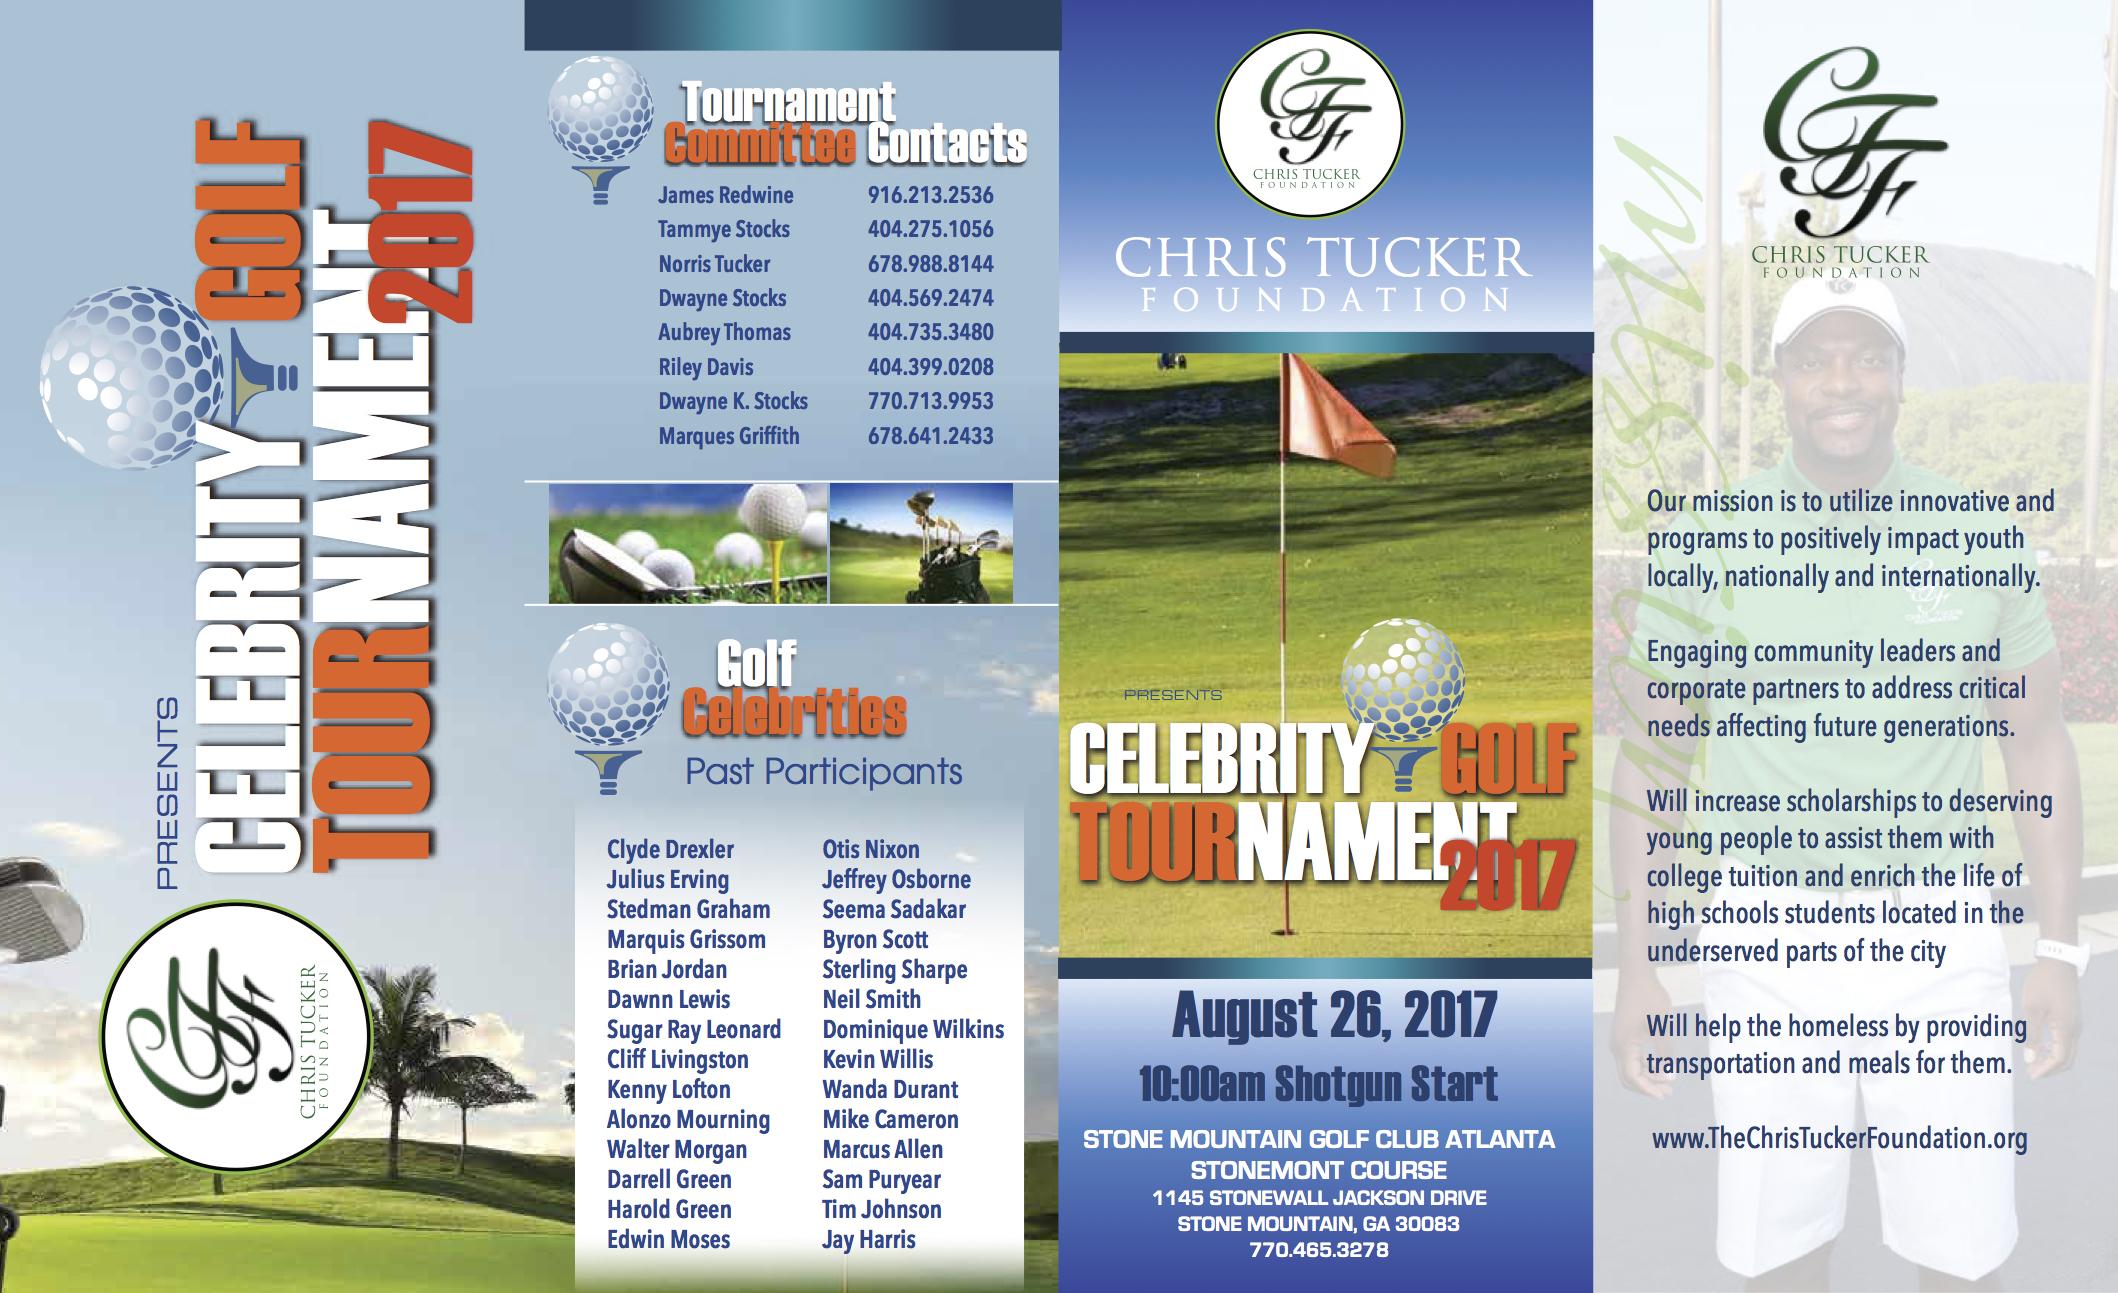 The Chris Tucker Foundation Celebrity Golf Tournament on August 26, 2017